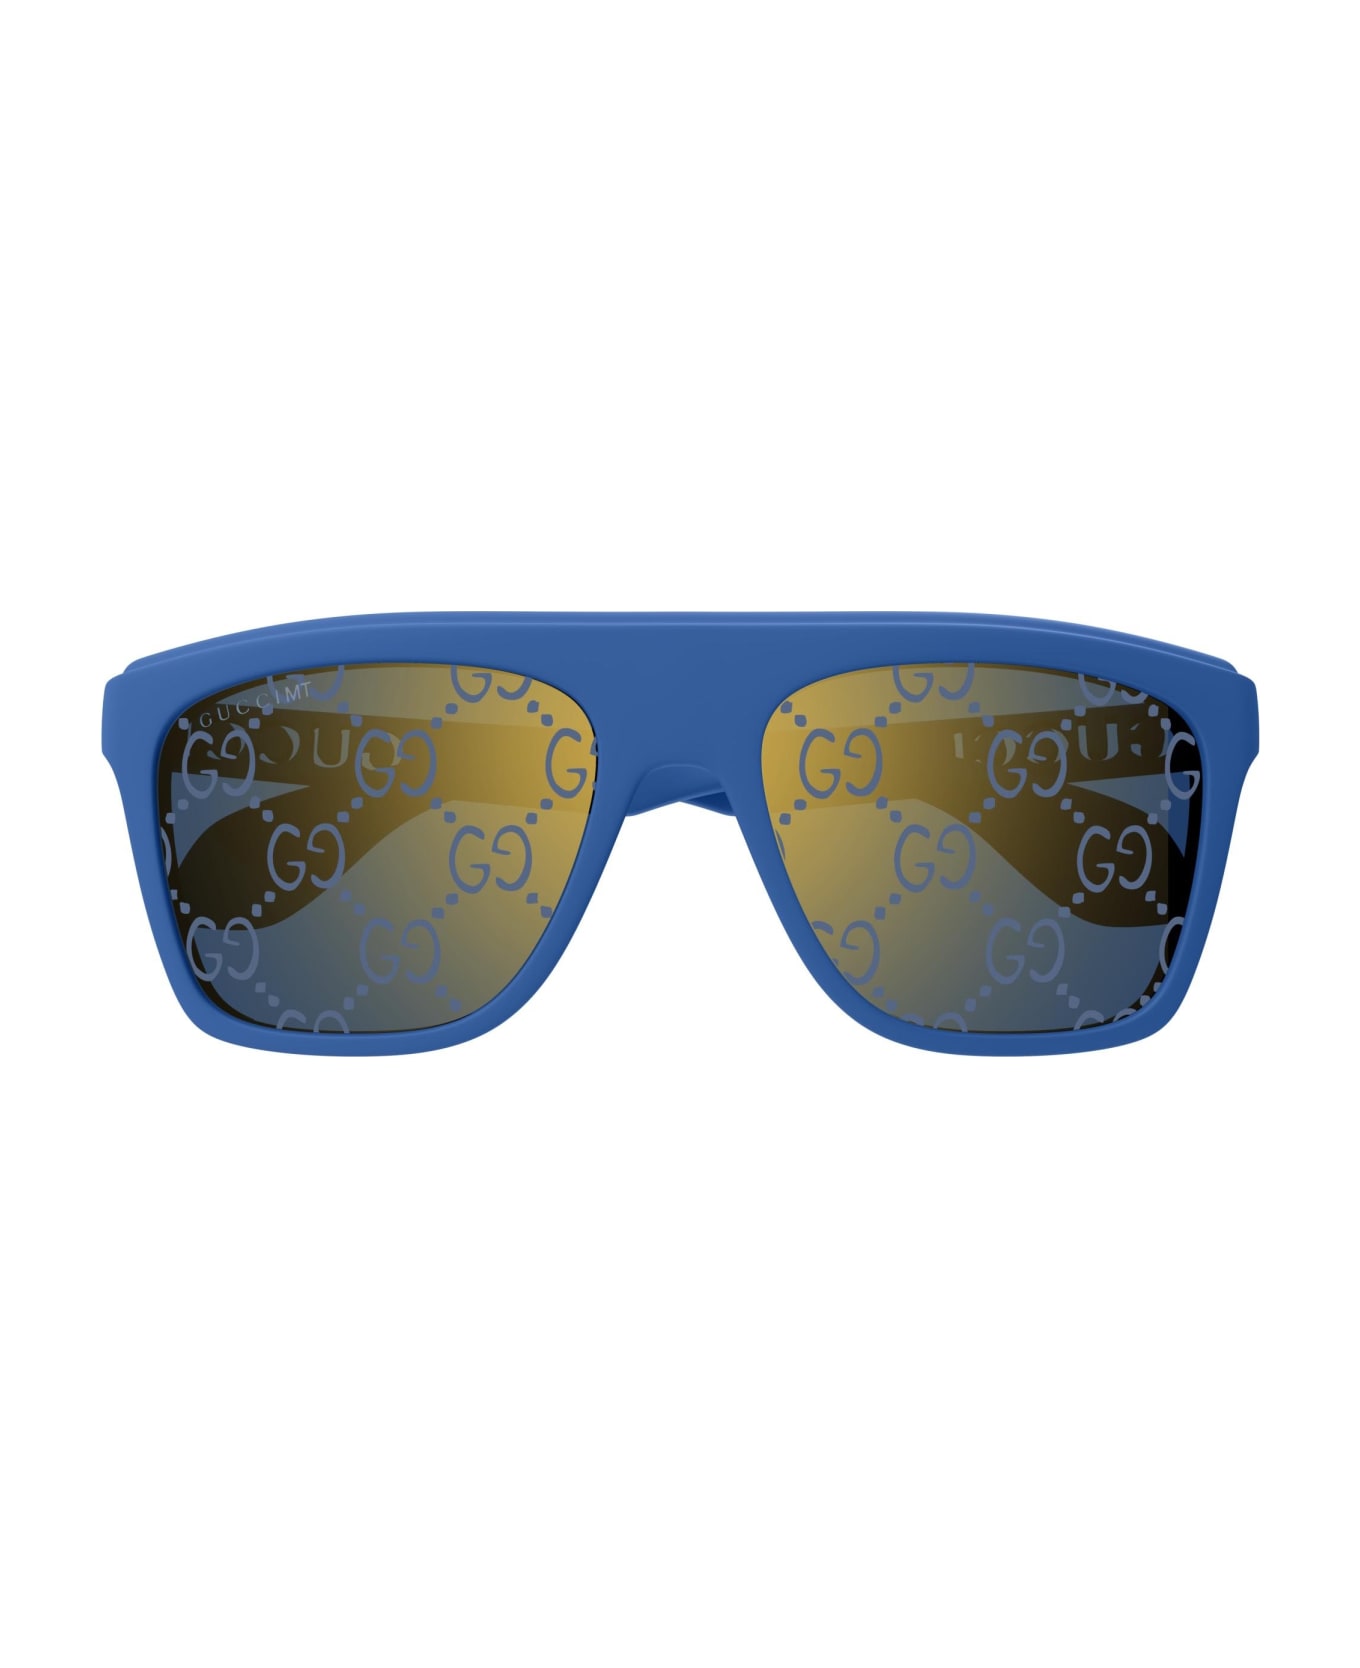 Gucci Eyewear Sunglasses - Blu/Blu サングラス